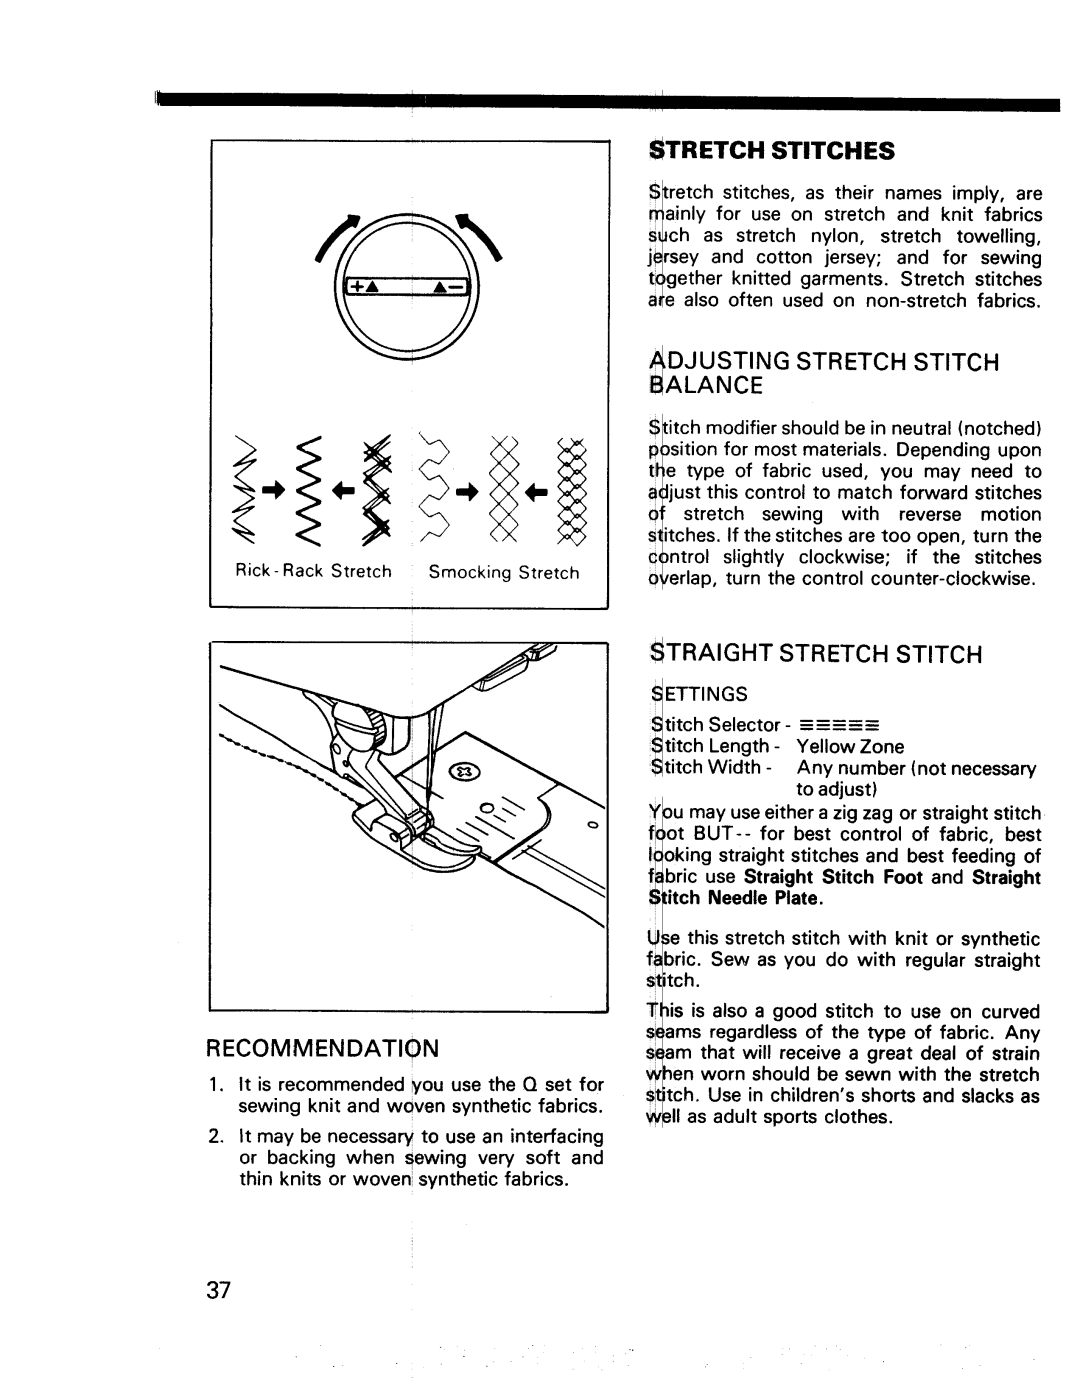 Kenmore 17920, 17922 manual lliil, Adjusting, Recommendation, Straight Stretch Stitch, Stitches, Balance, adjust 